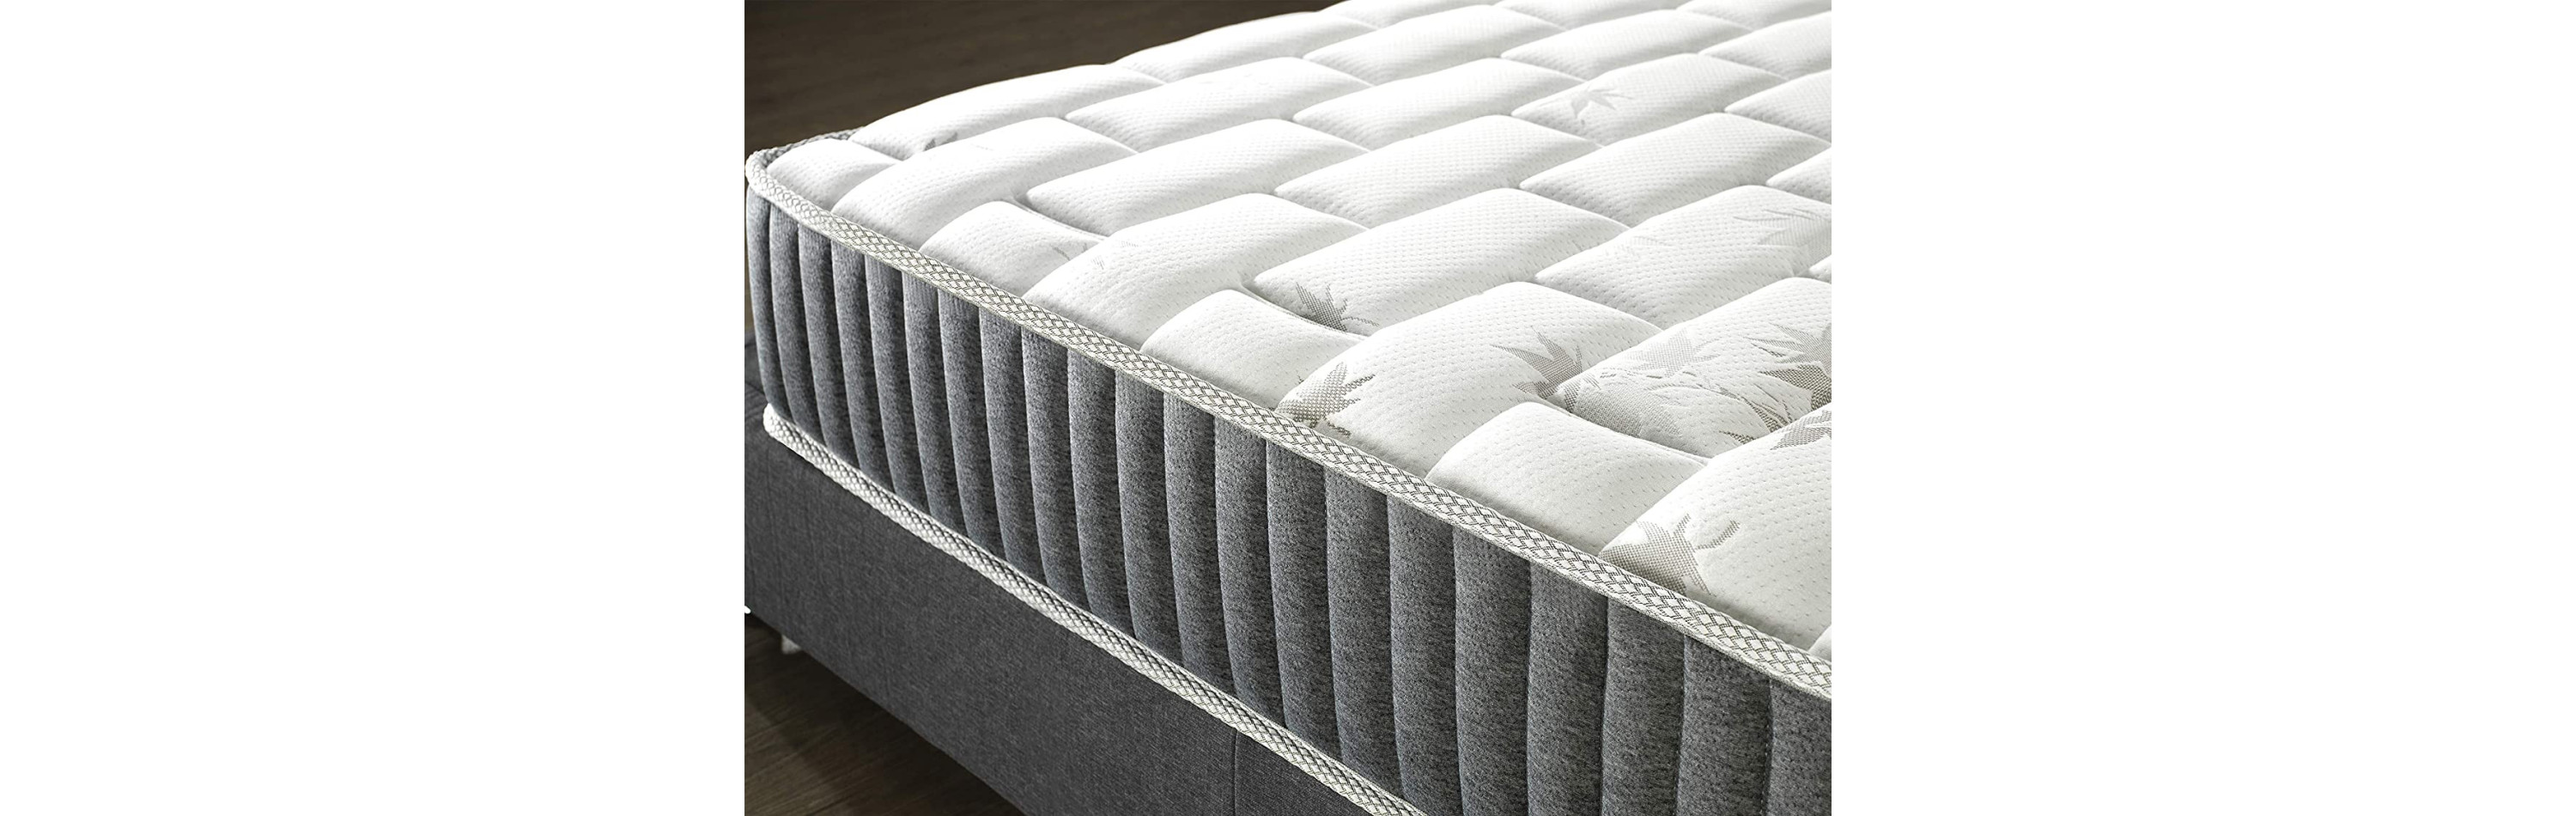 Sensoreve Matelas Galice Hybrid, Royal Comfort Comforpedic 5 Zone Queen Bed Mattress In A Box